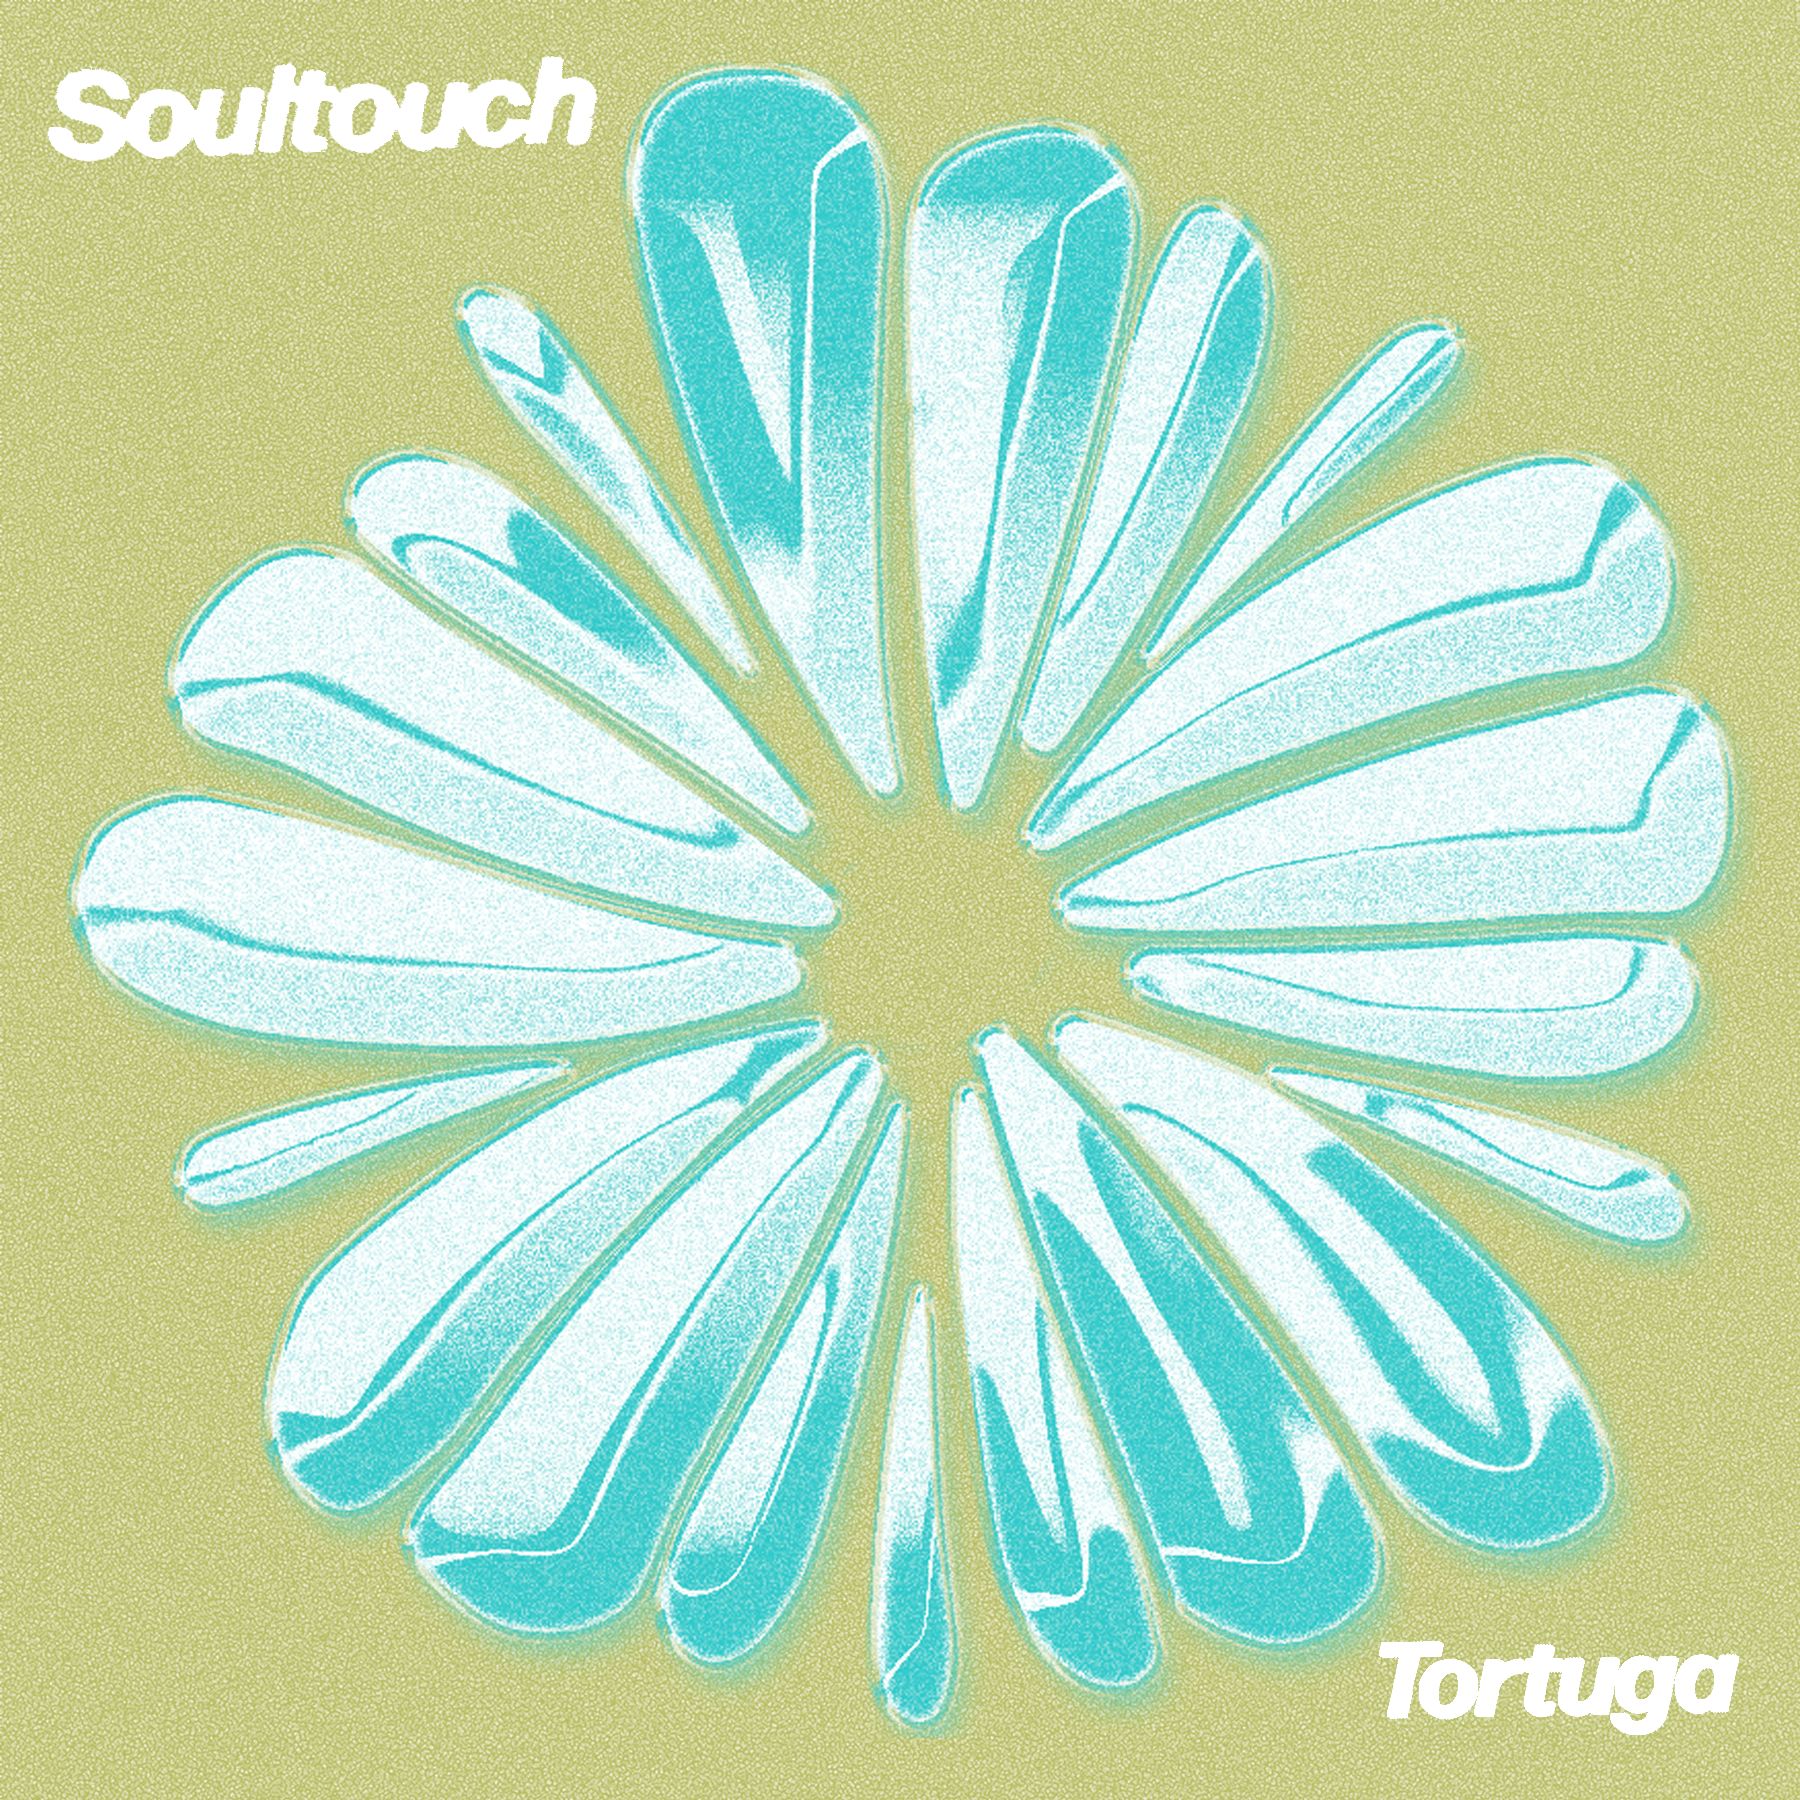 Muat turun PREMIERE : Tortuga - Soultouch